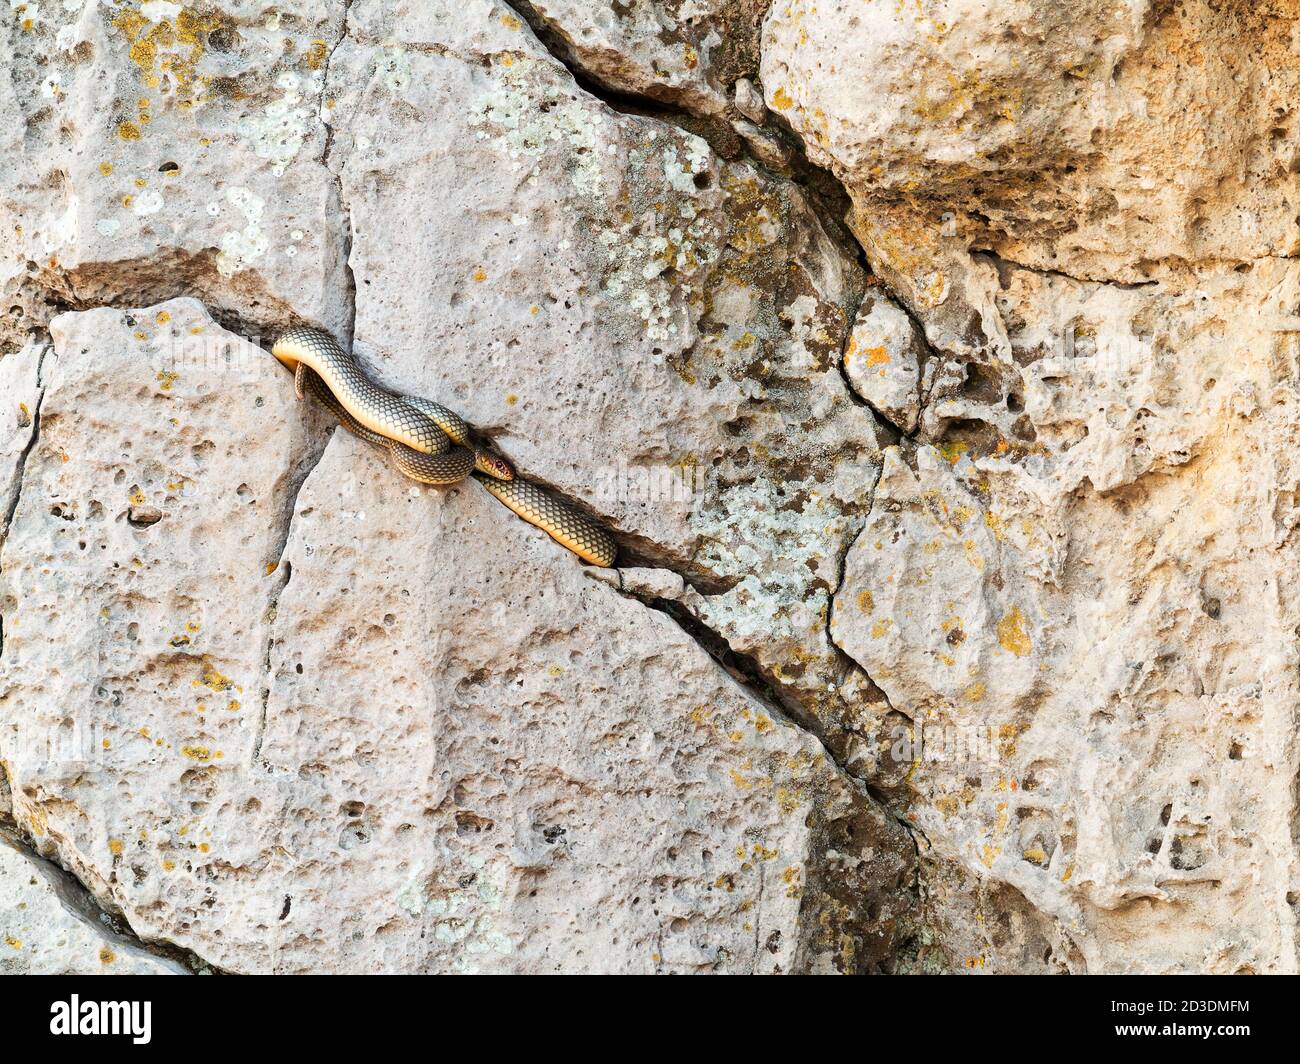 Sleeping snake in a huge stone crack Stock Photo